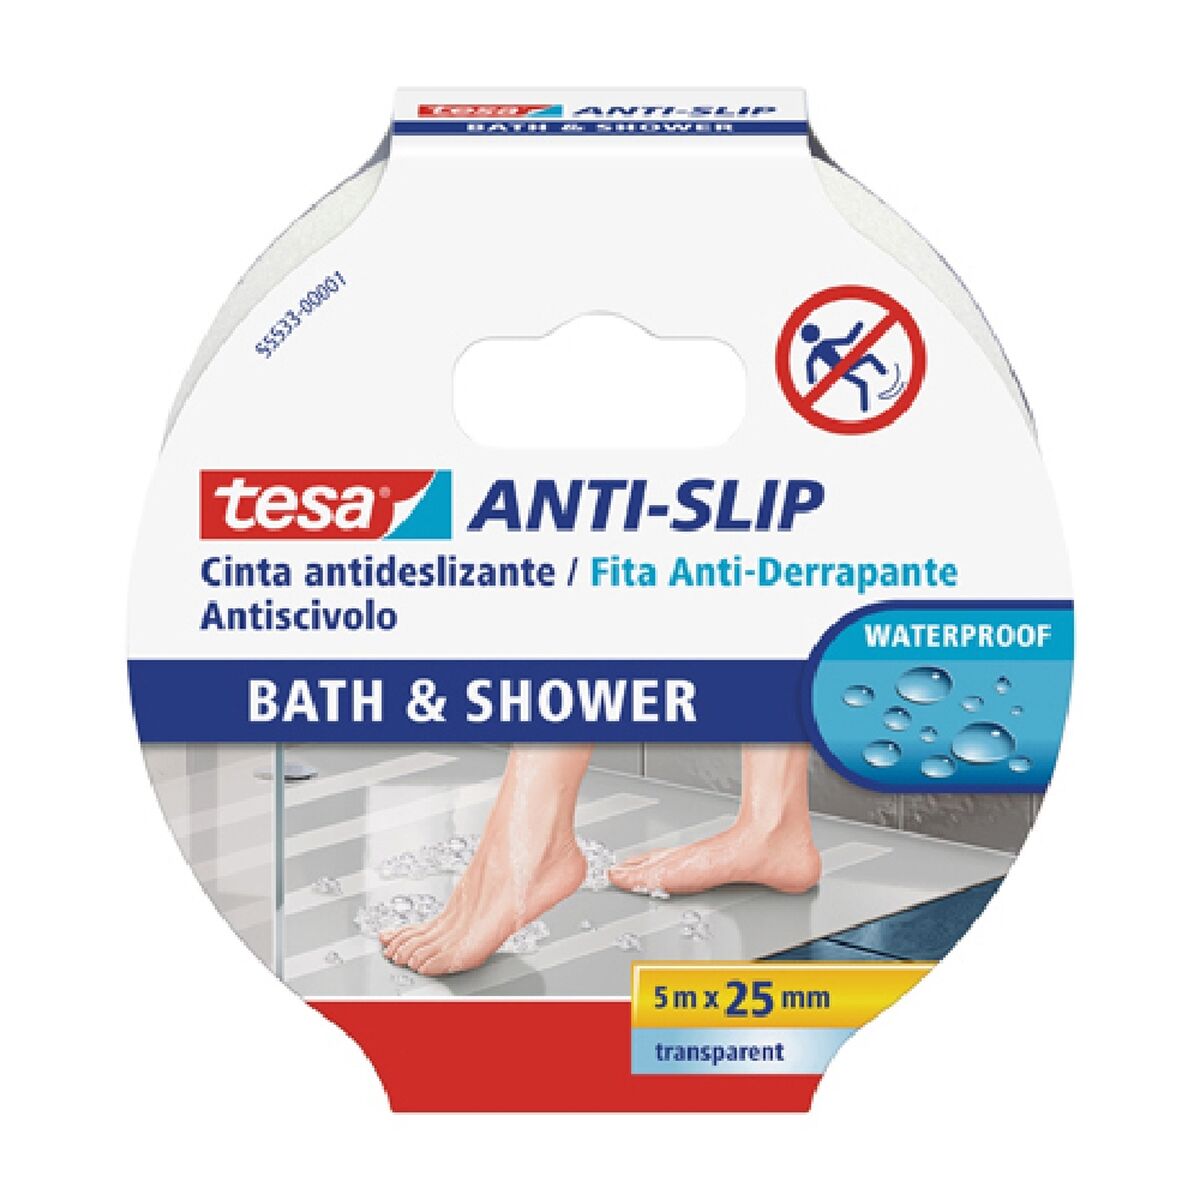 Nastro Adesivo TESA Anti slip bath & shower 5mx25mm Antiscivolo Trasparente PVC (1 Pezzi)